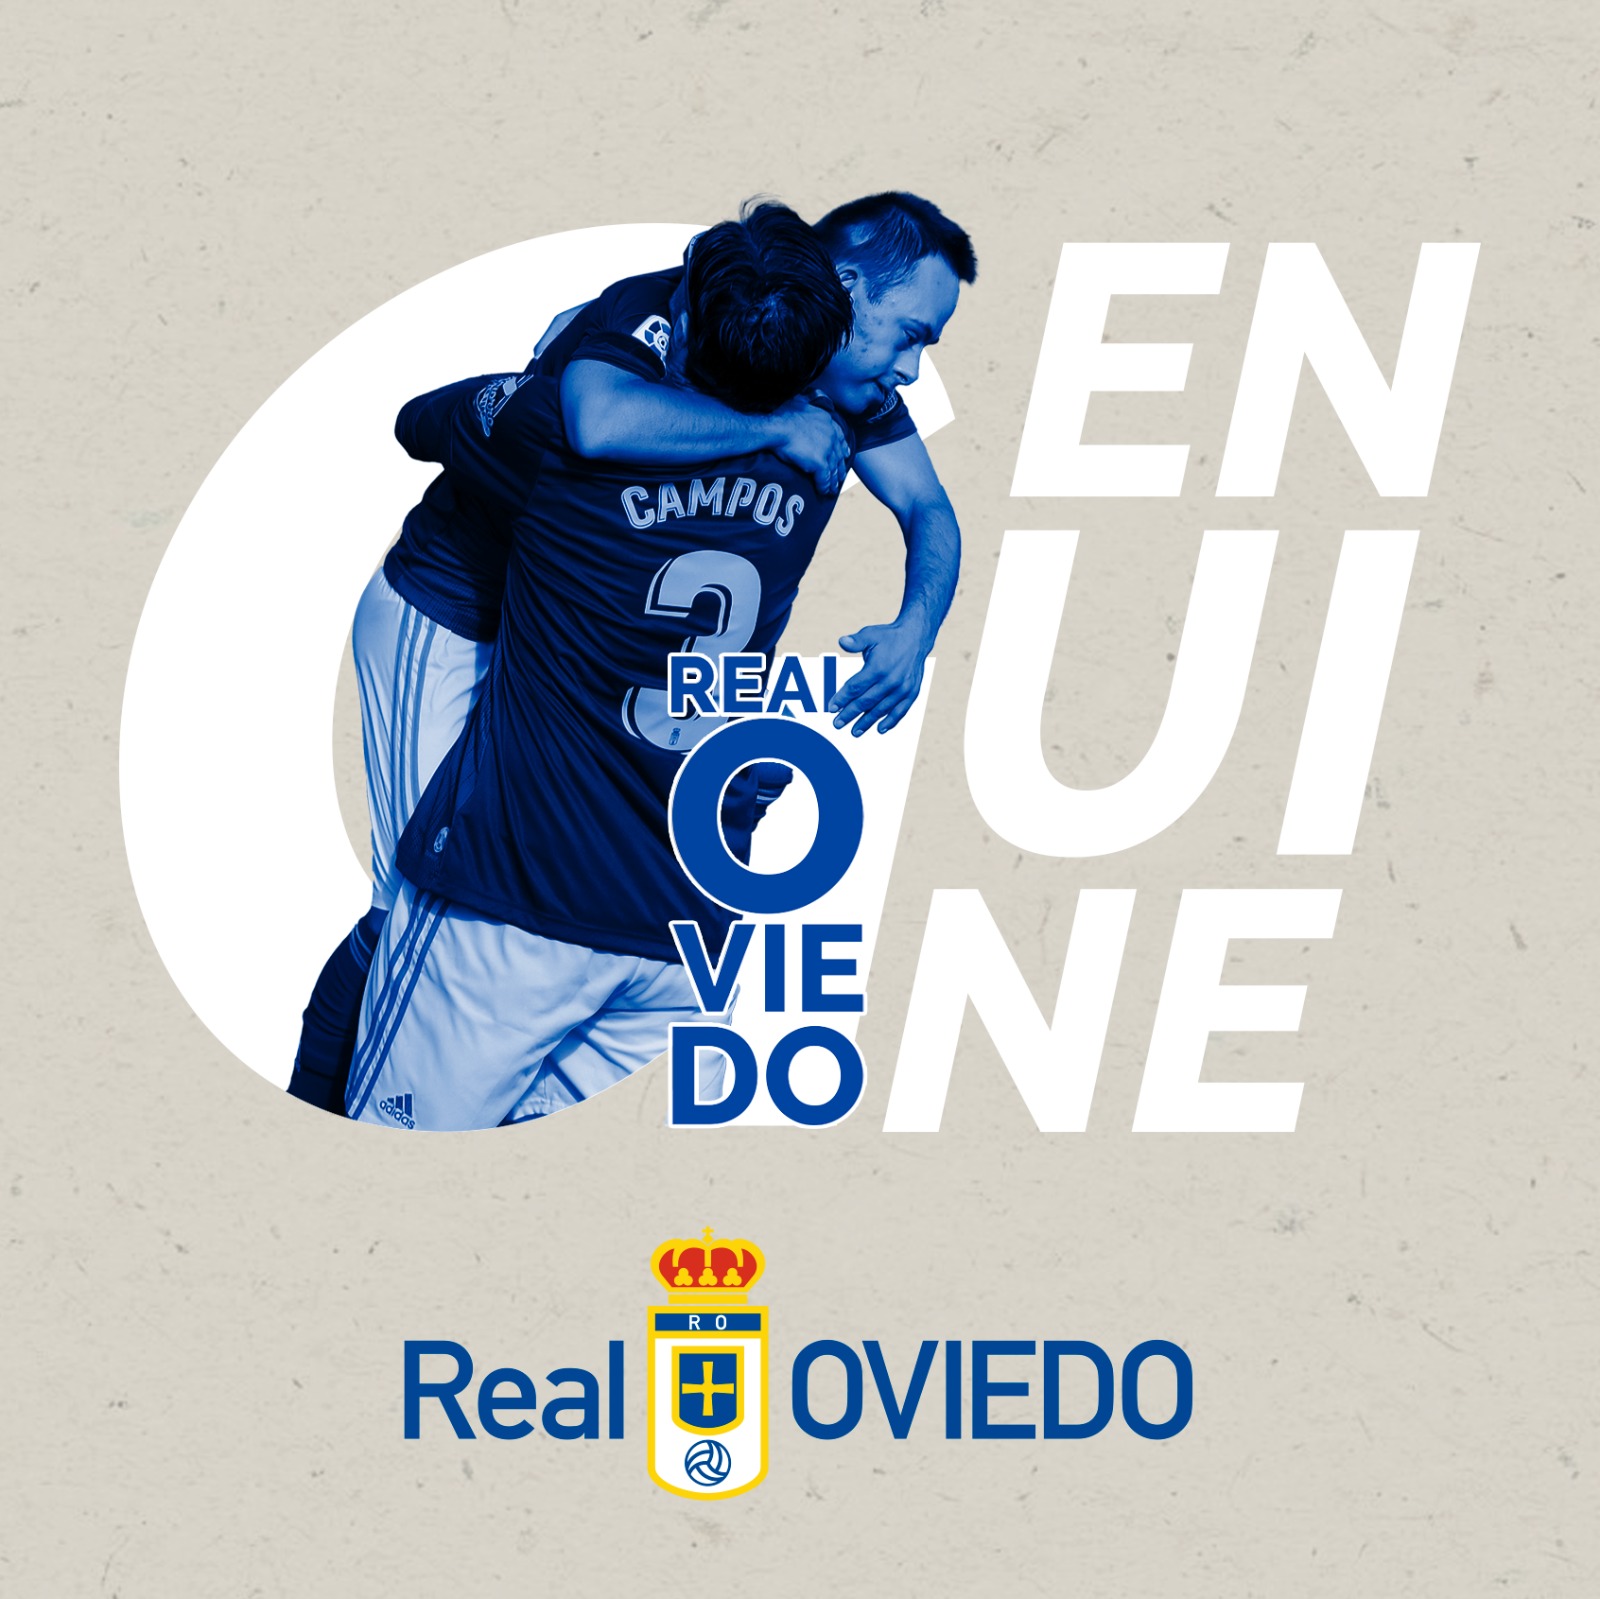 Foto oficial del Real Oviedo Genuine, Real Oviedo